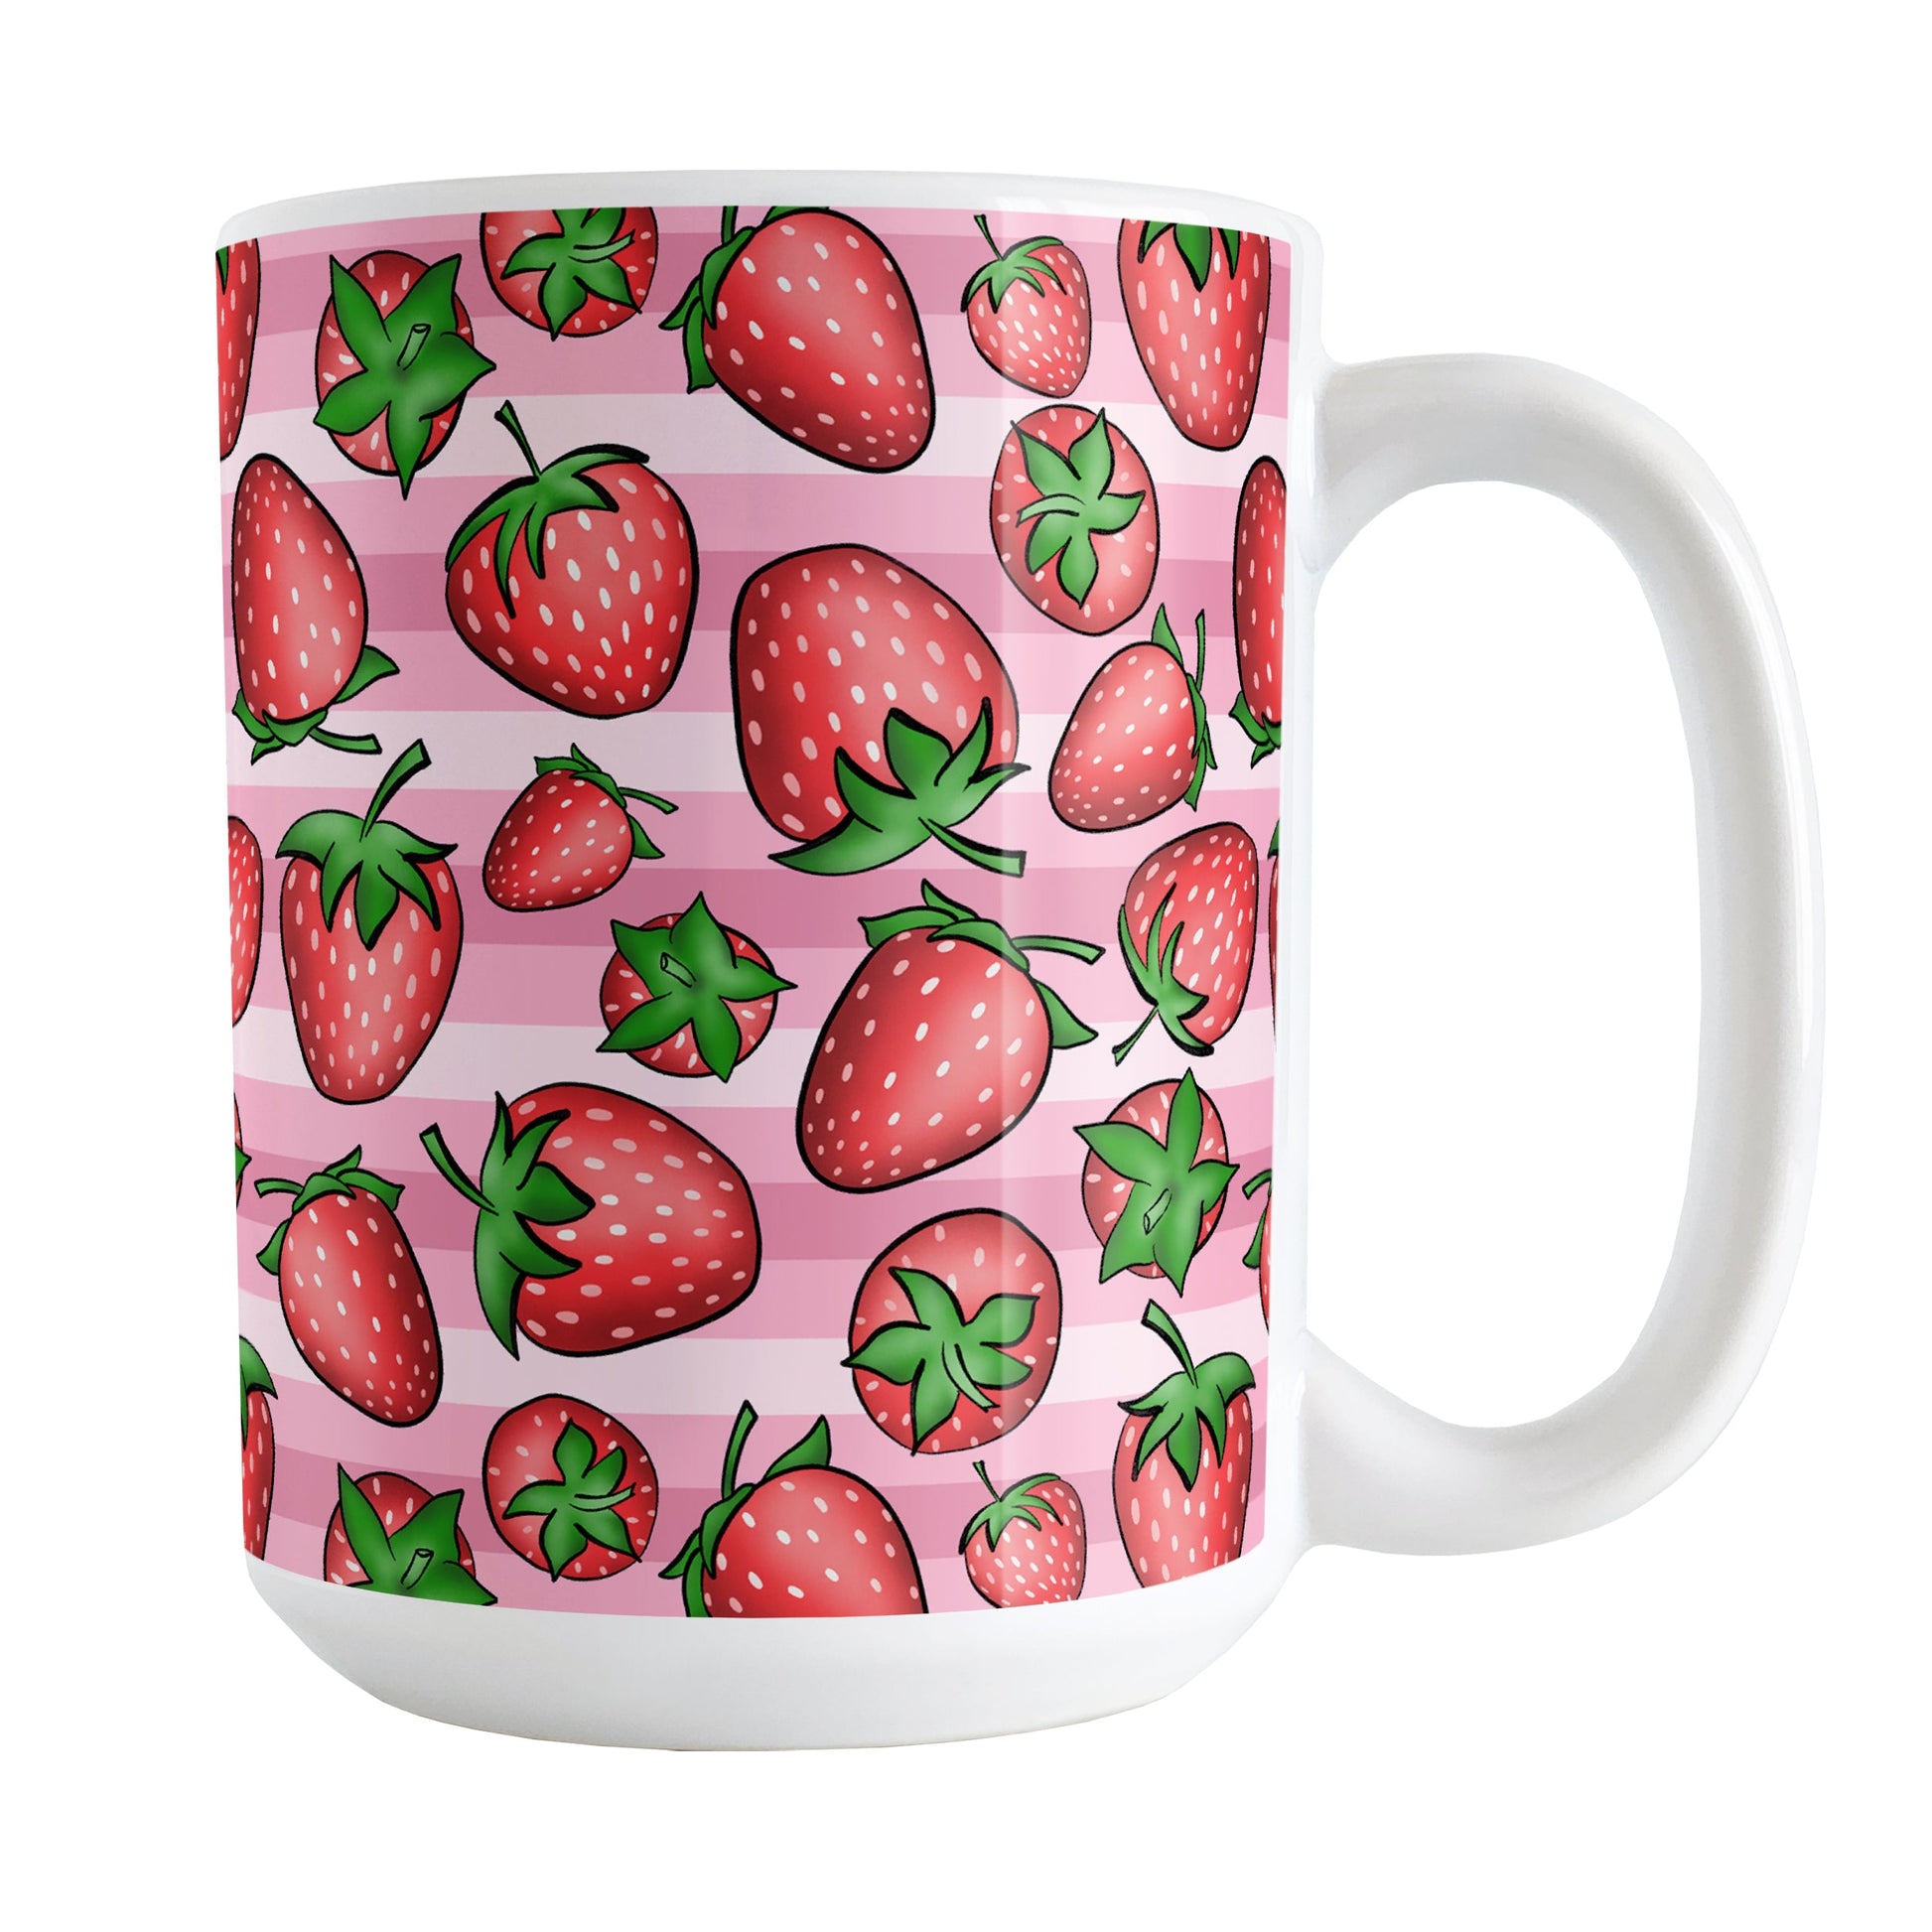 Strawberries on Pink Stripes Mug (15oz) at Amy's Coffee Mugs